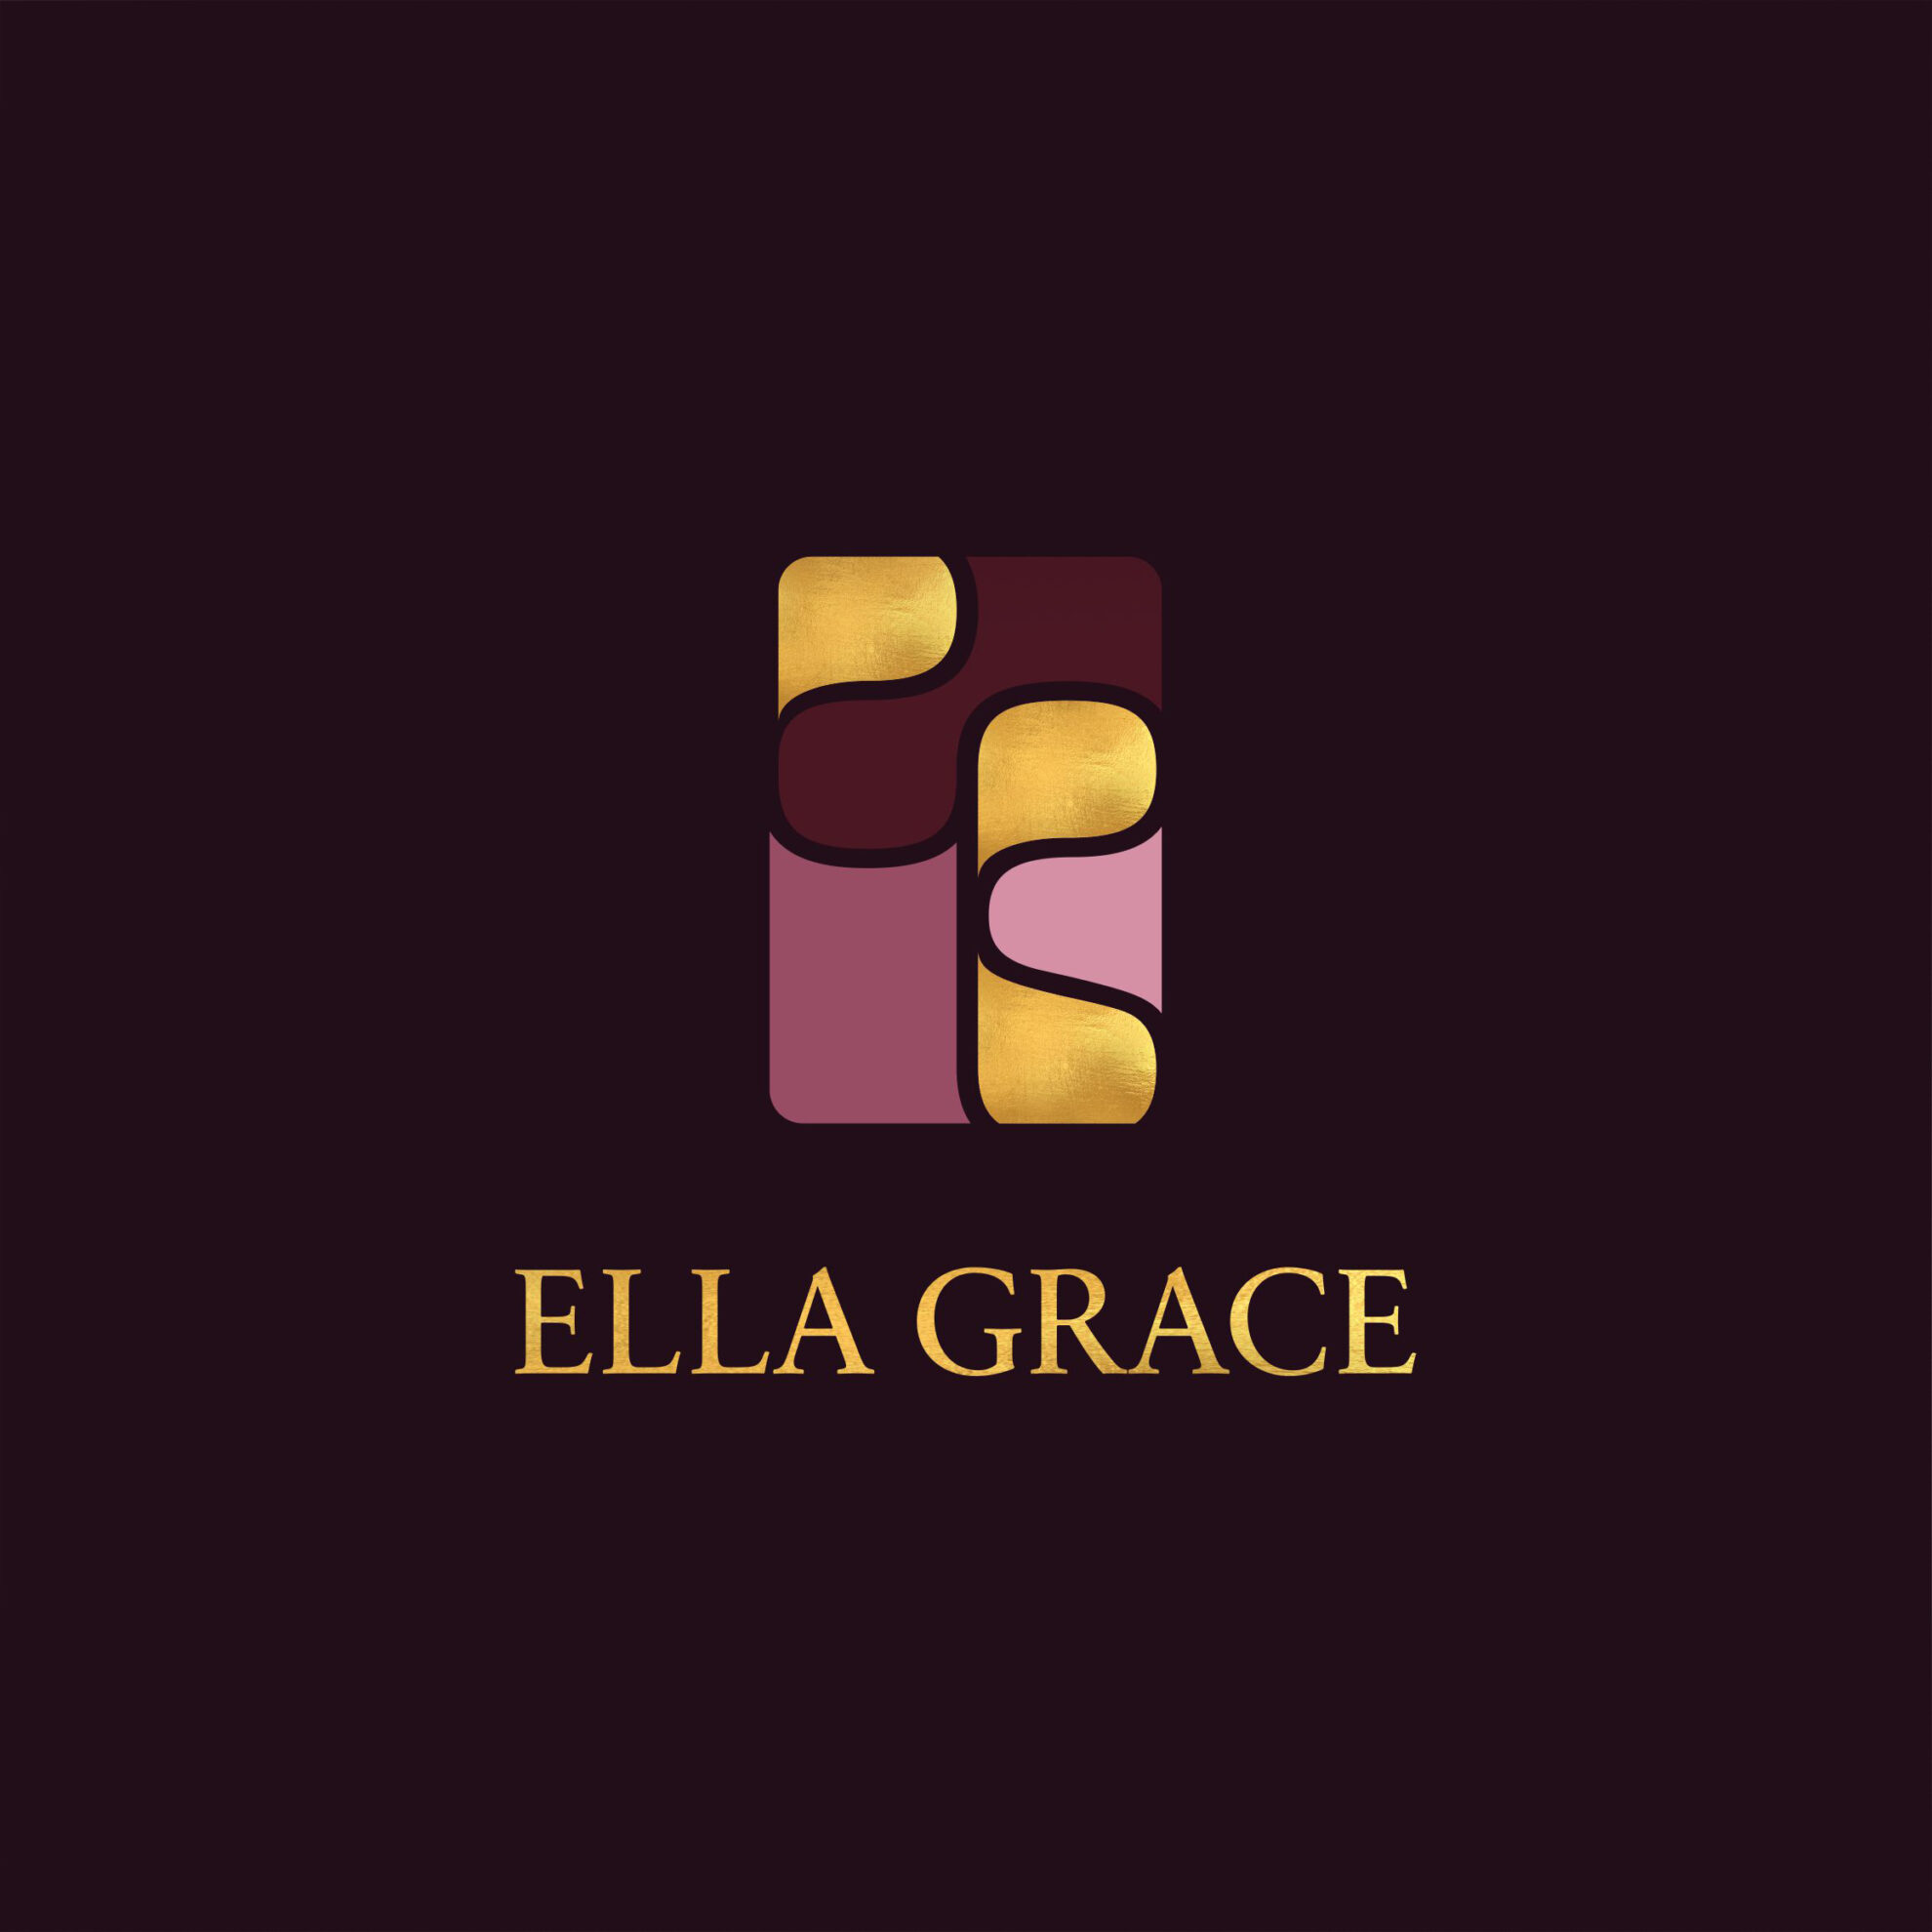 Ella Grace dark portrait